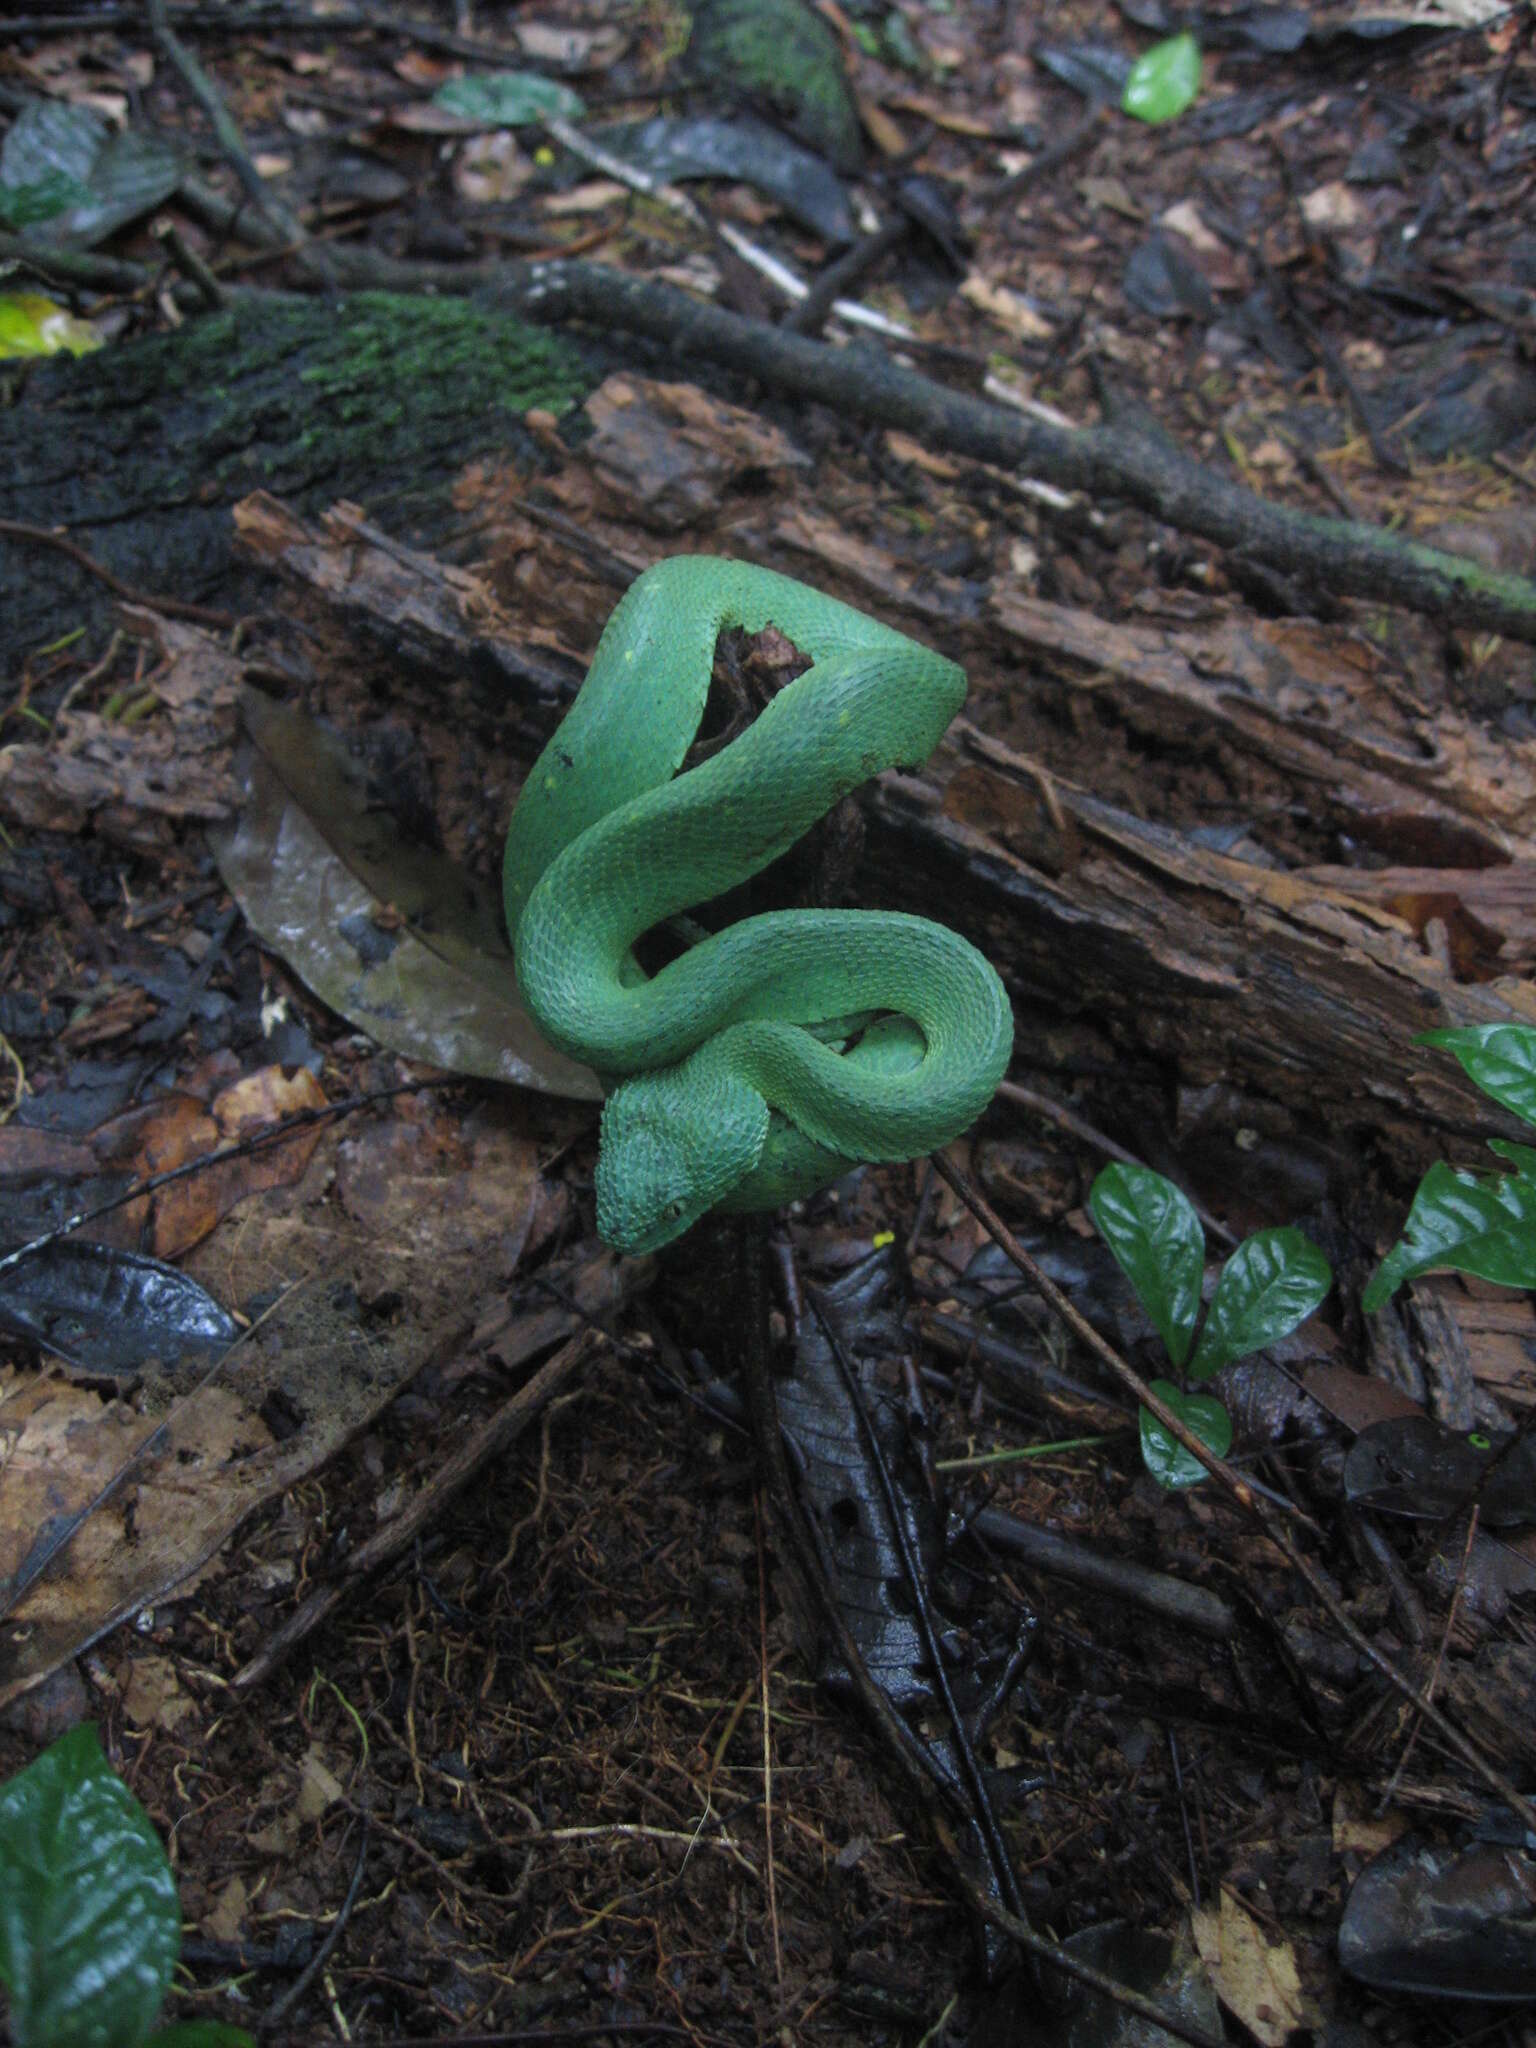 Green Bush Viper - Encyclopedia of Life